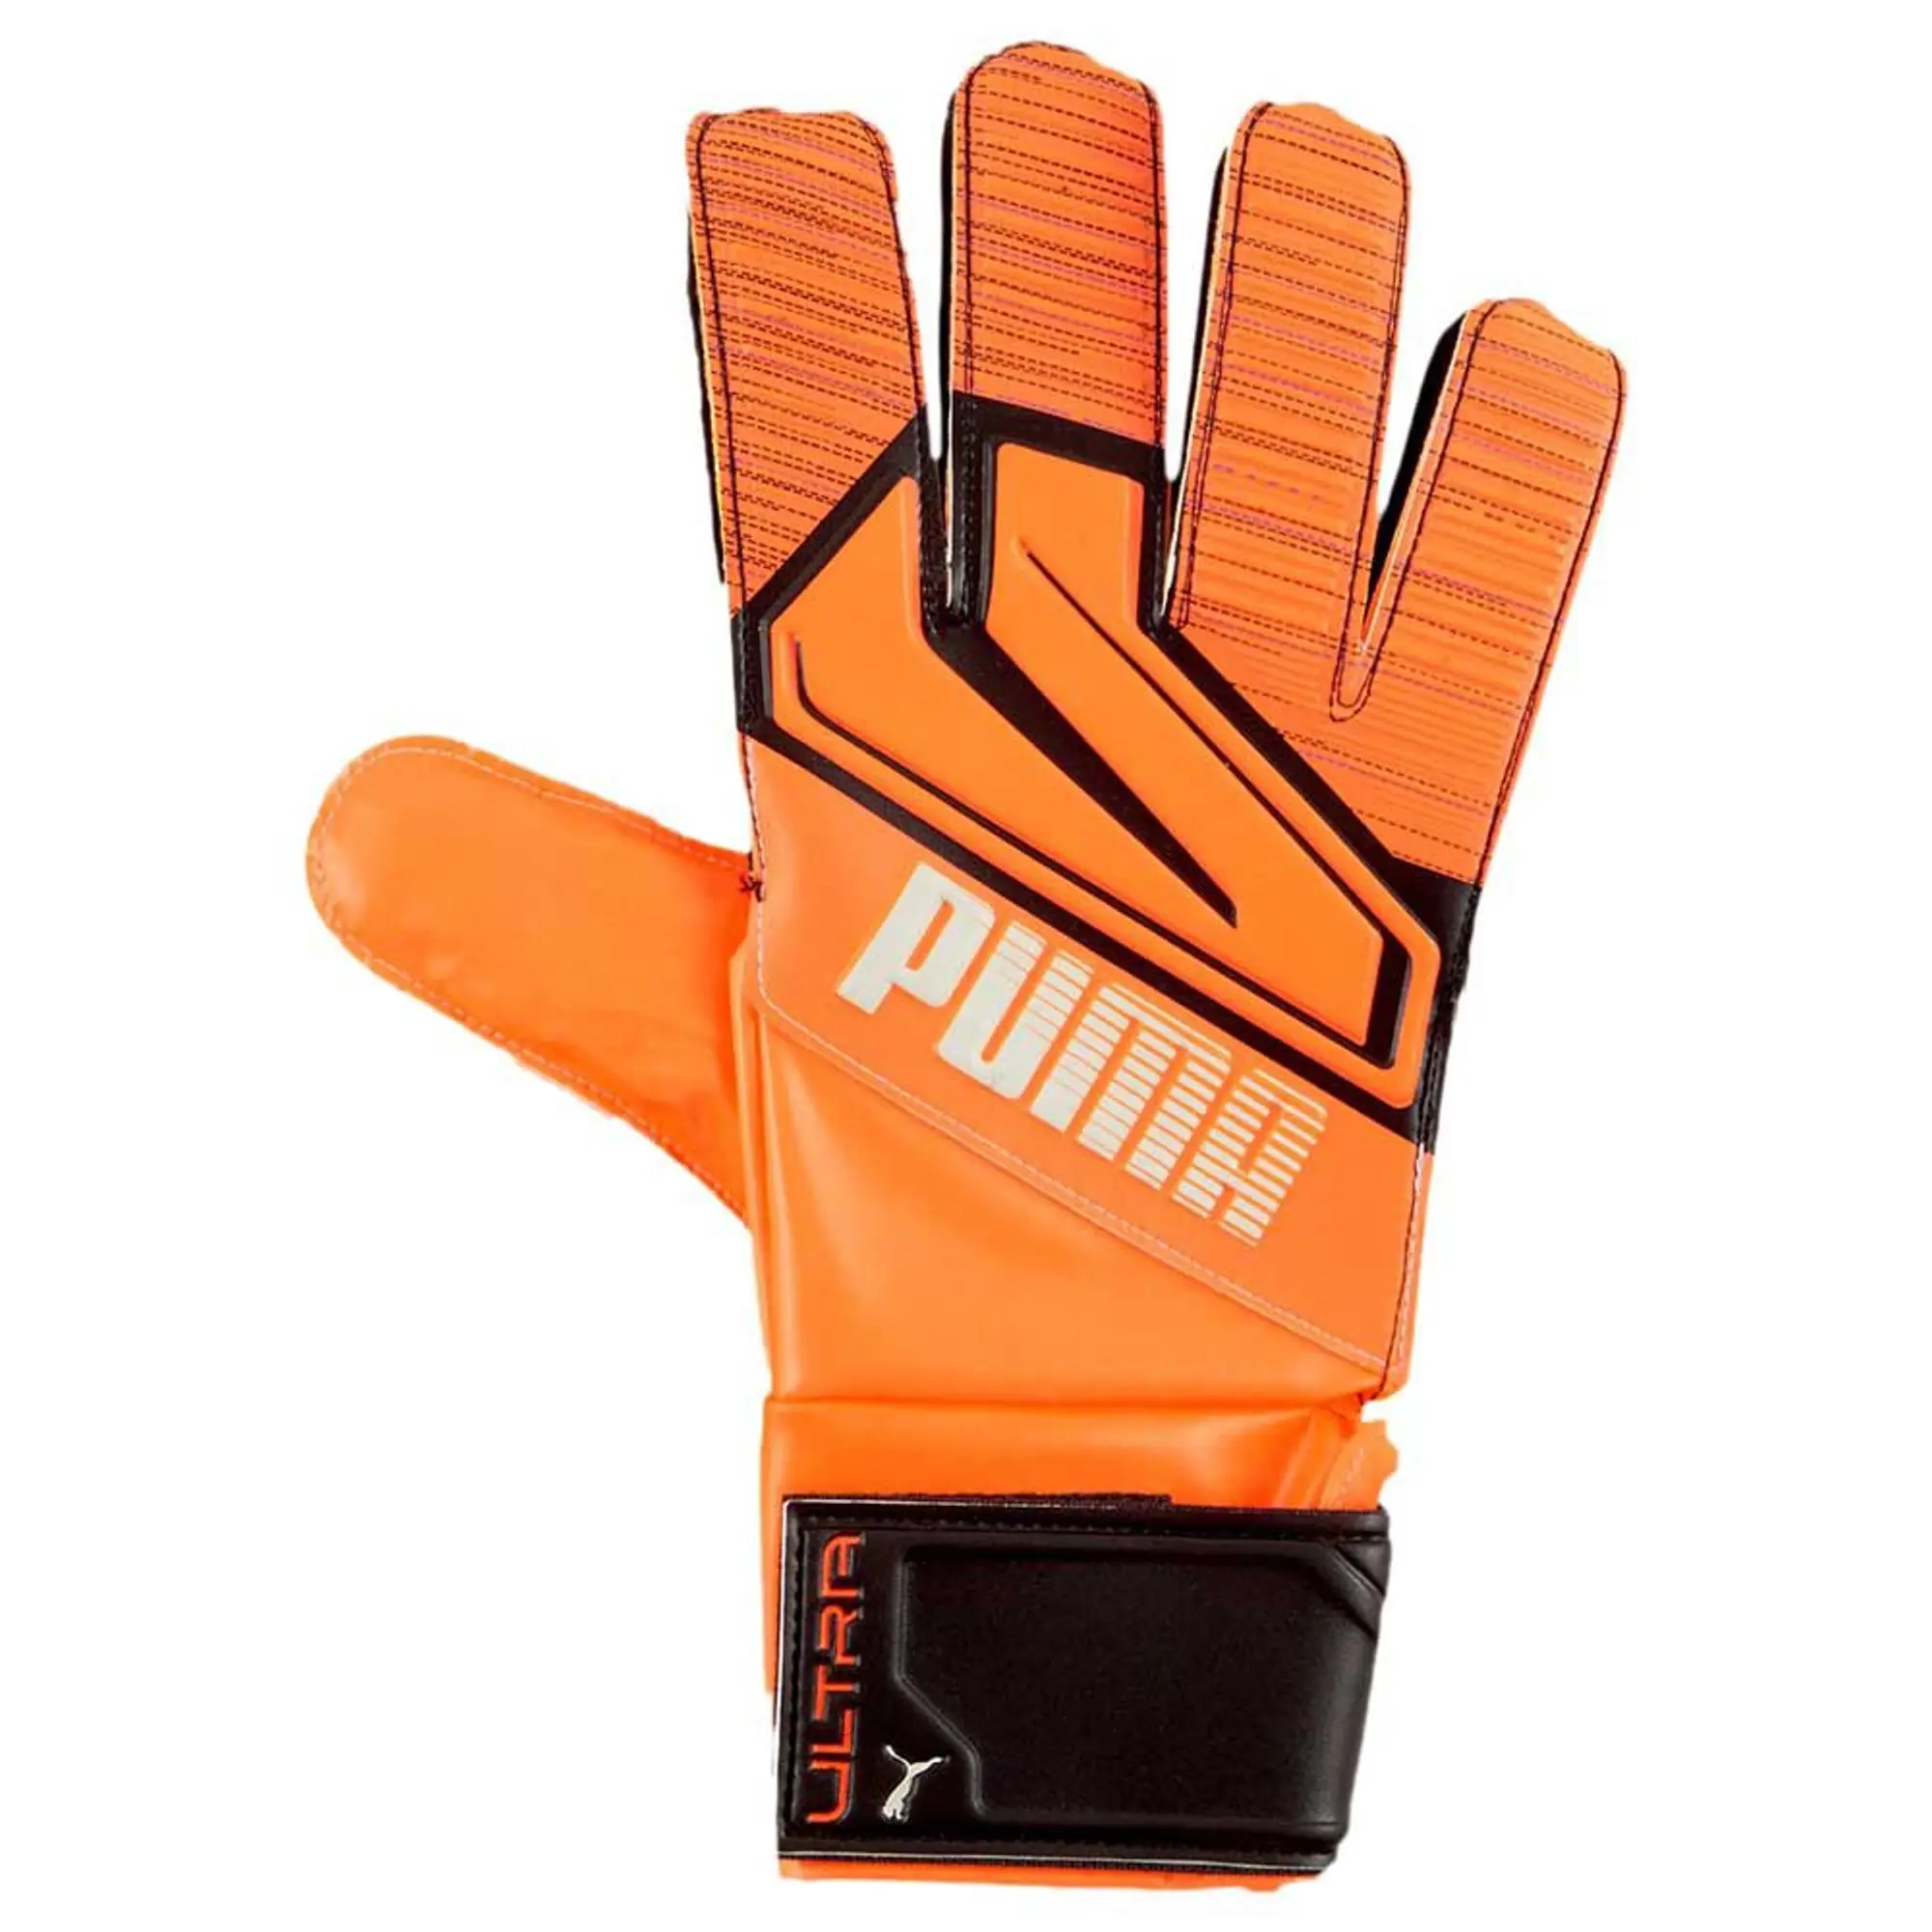 Puma Ultra Grip 4 Rc Chasing Adrenaline Pack Goalkeeper Gloves  - Orange,Black